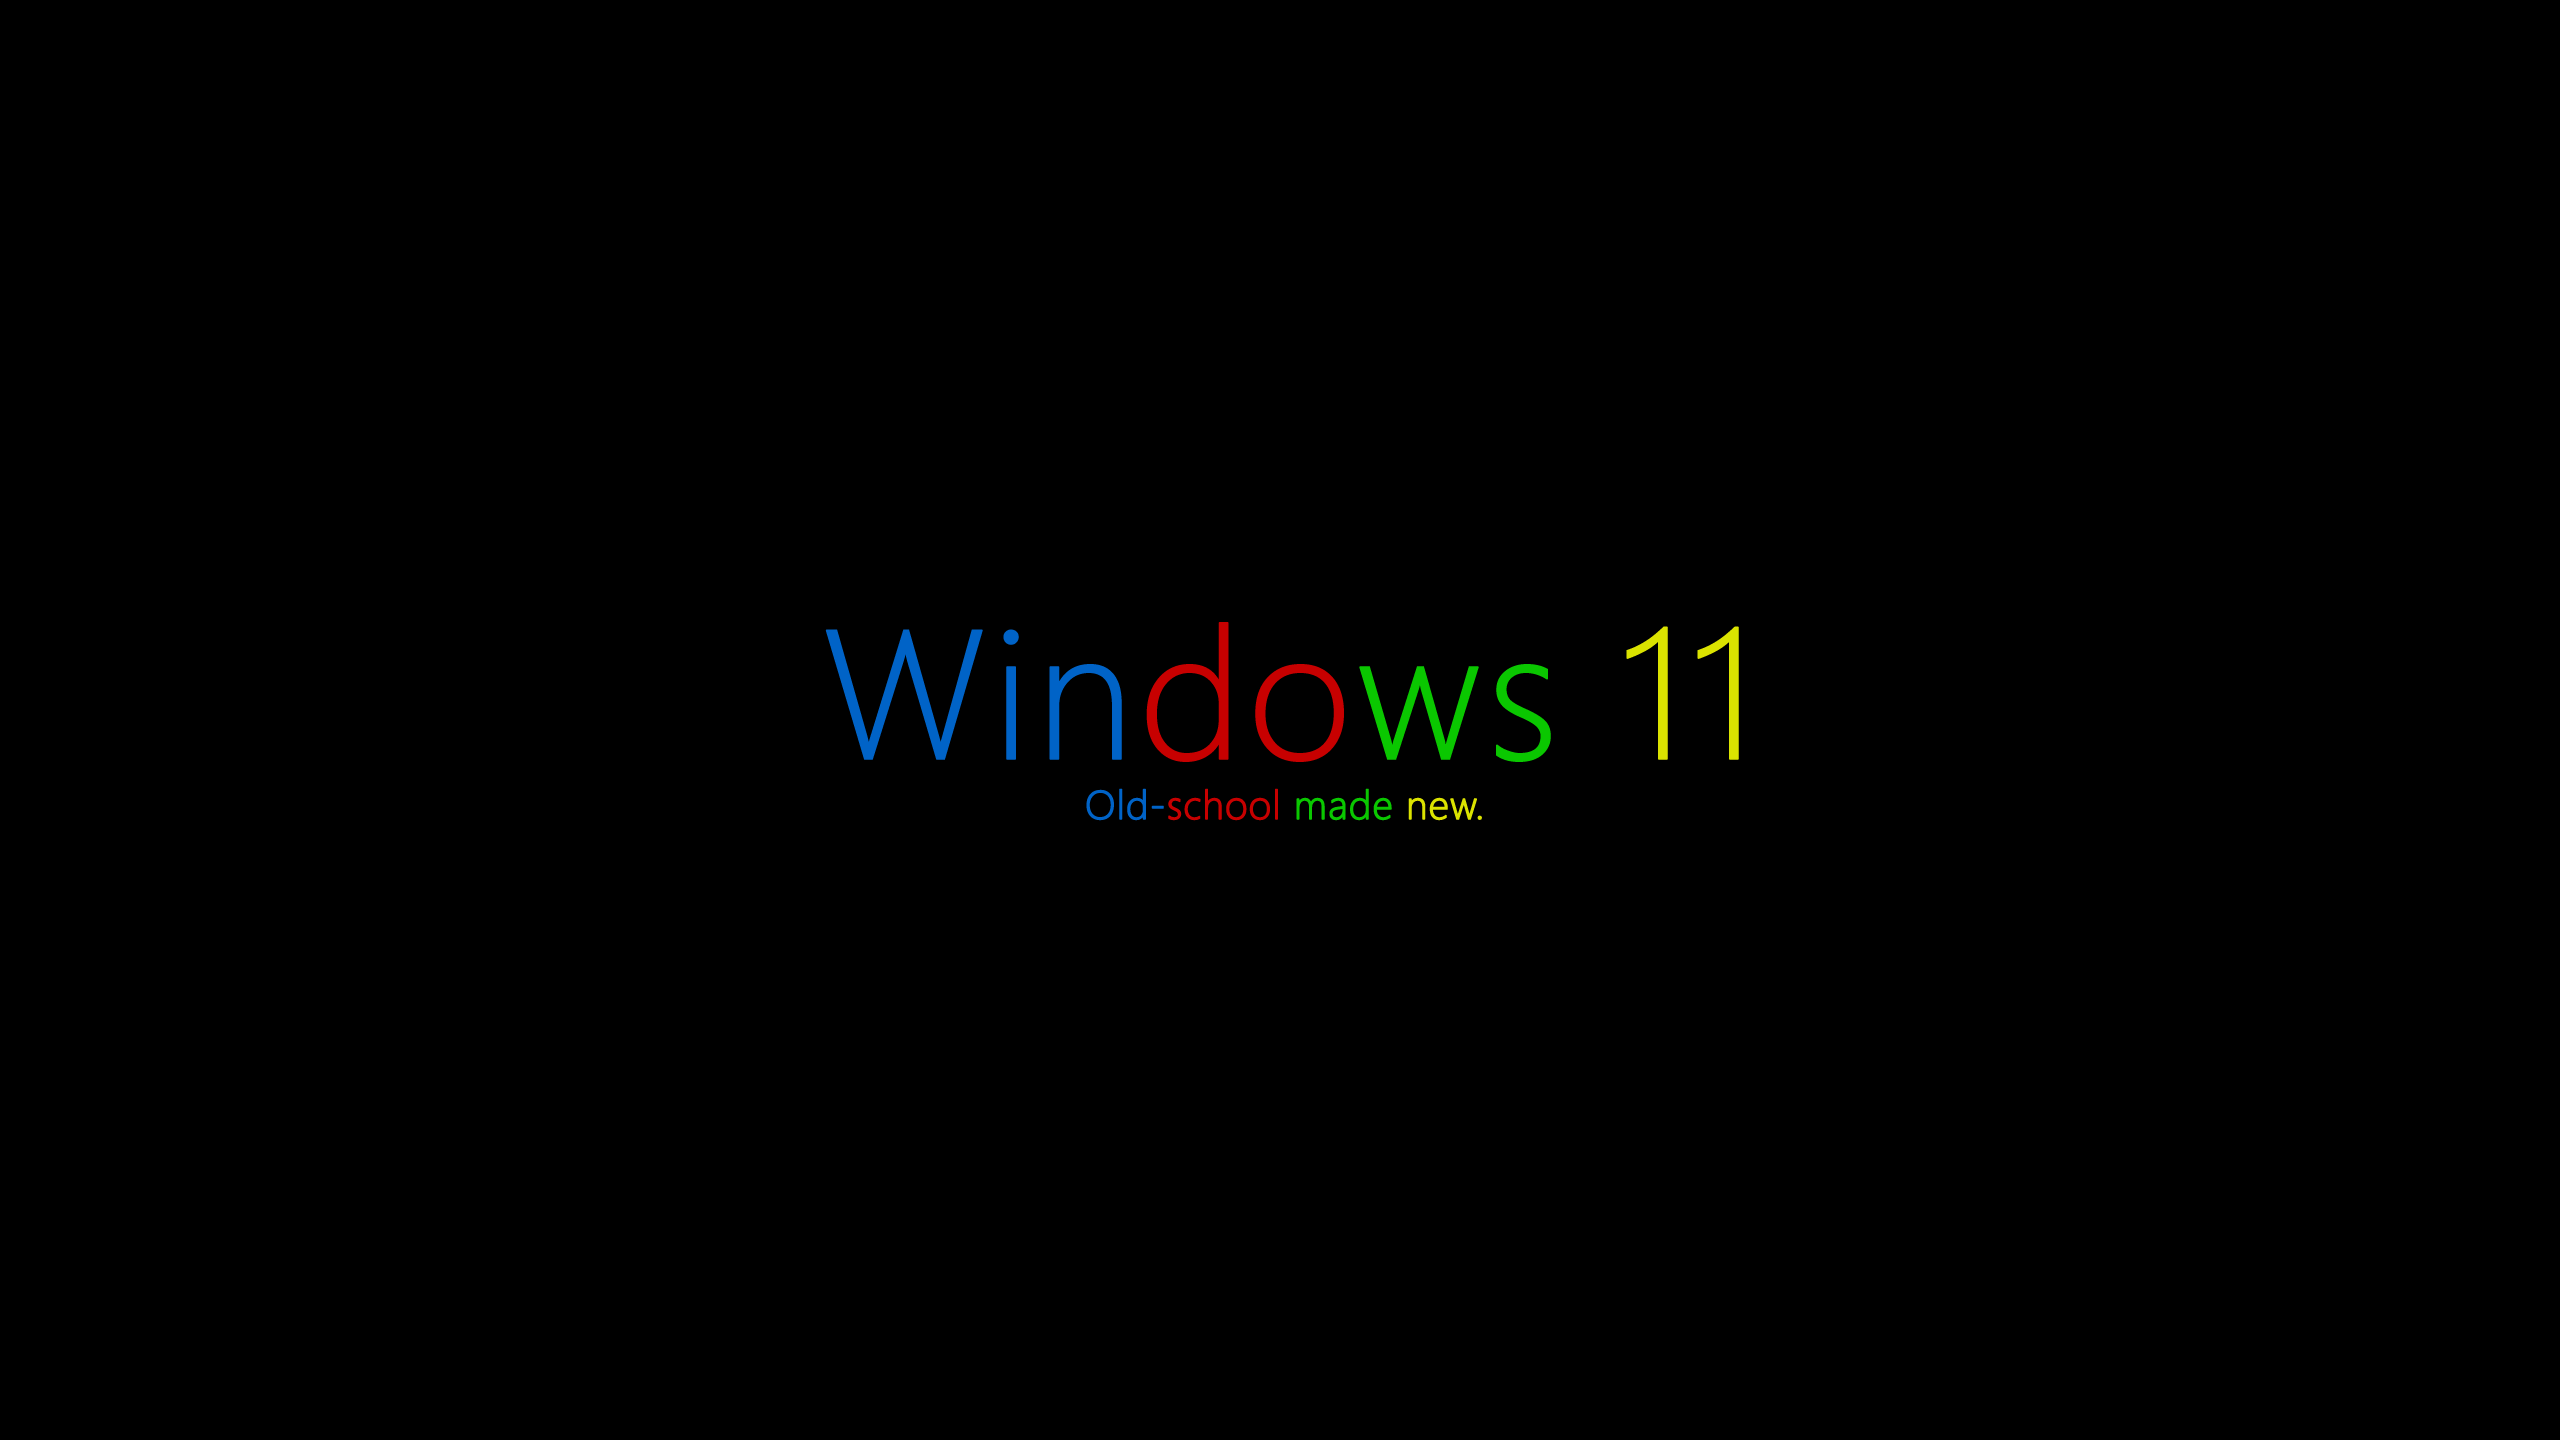 Windows 11 Wallpaper Free Windows 11 Background